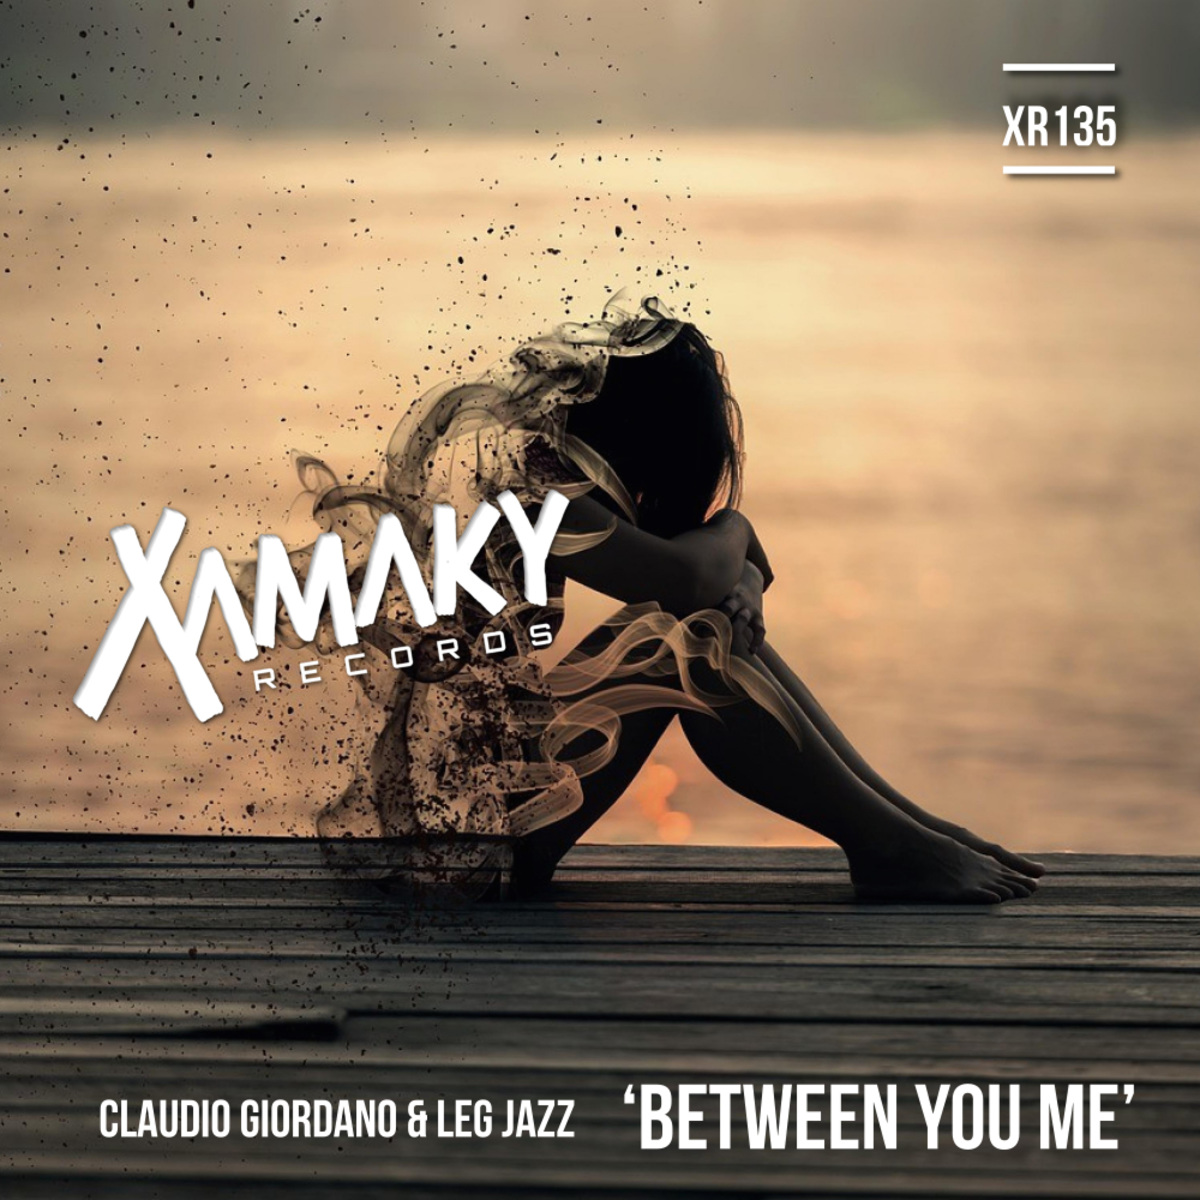 Claudio Giordano & Leg Jazz - Between You Me / Xamaky Records